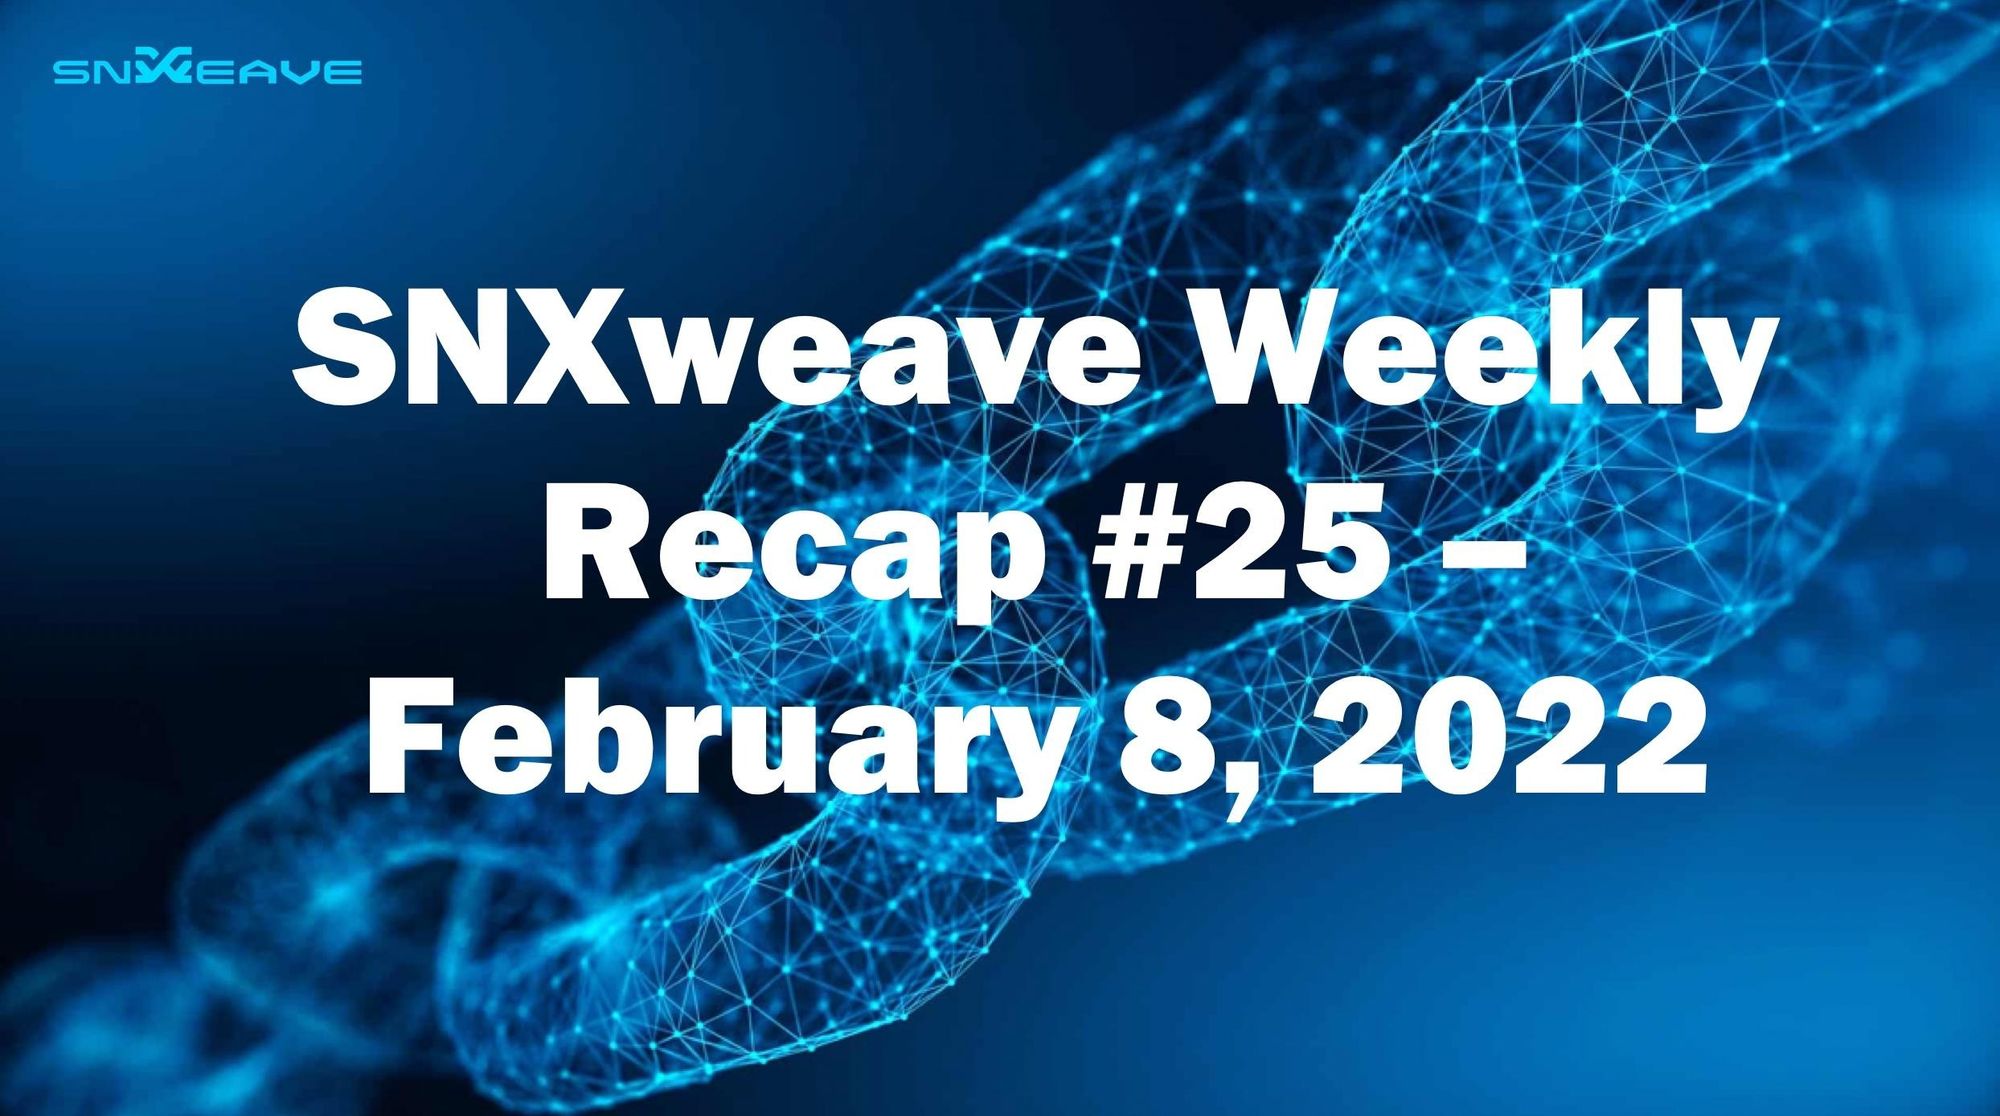 SNXweave Weekly Recap 25